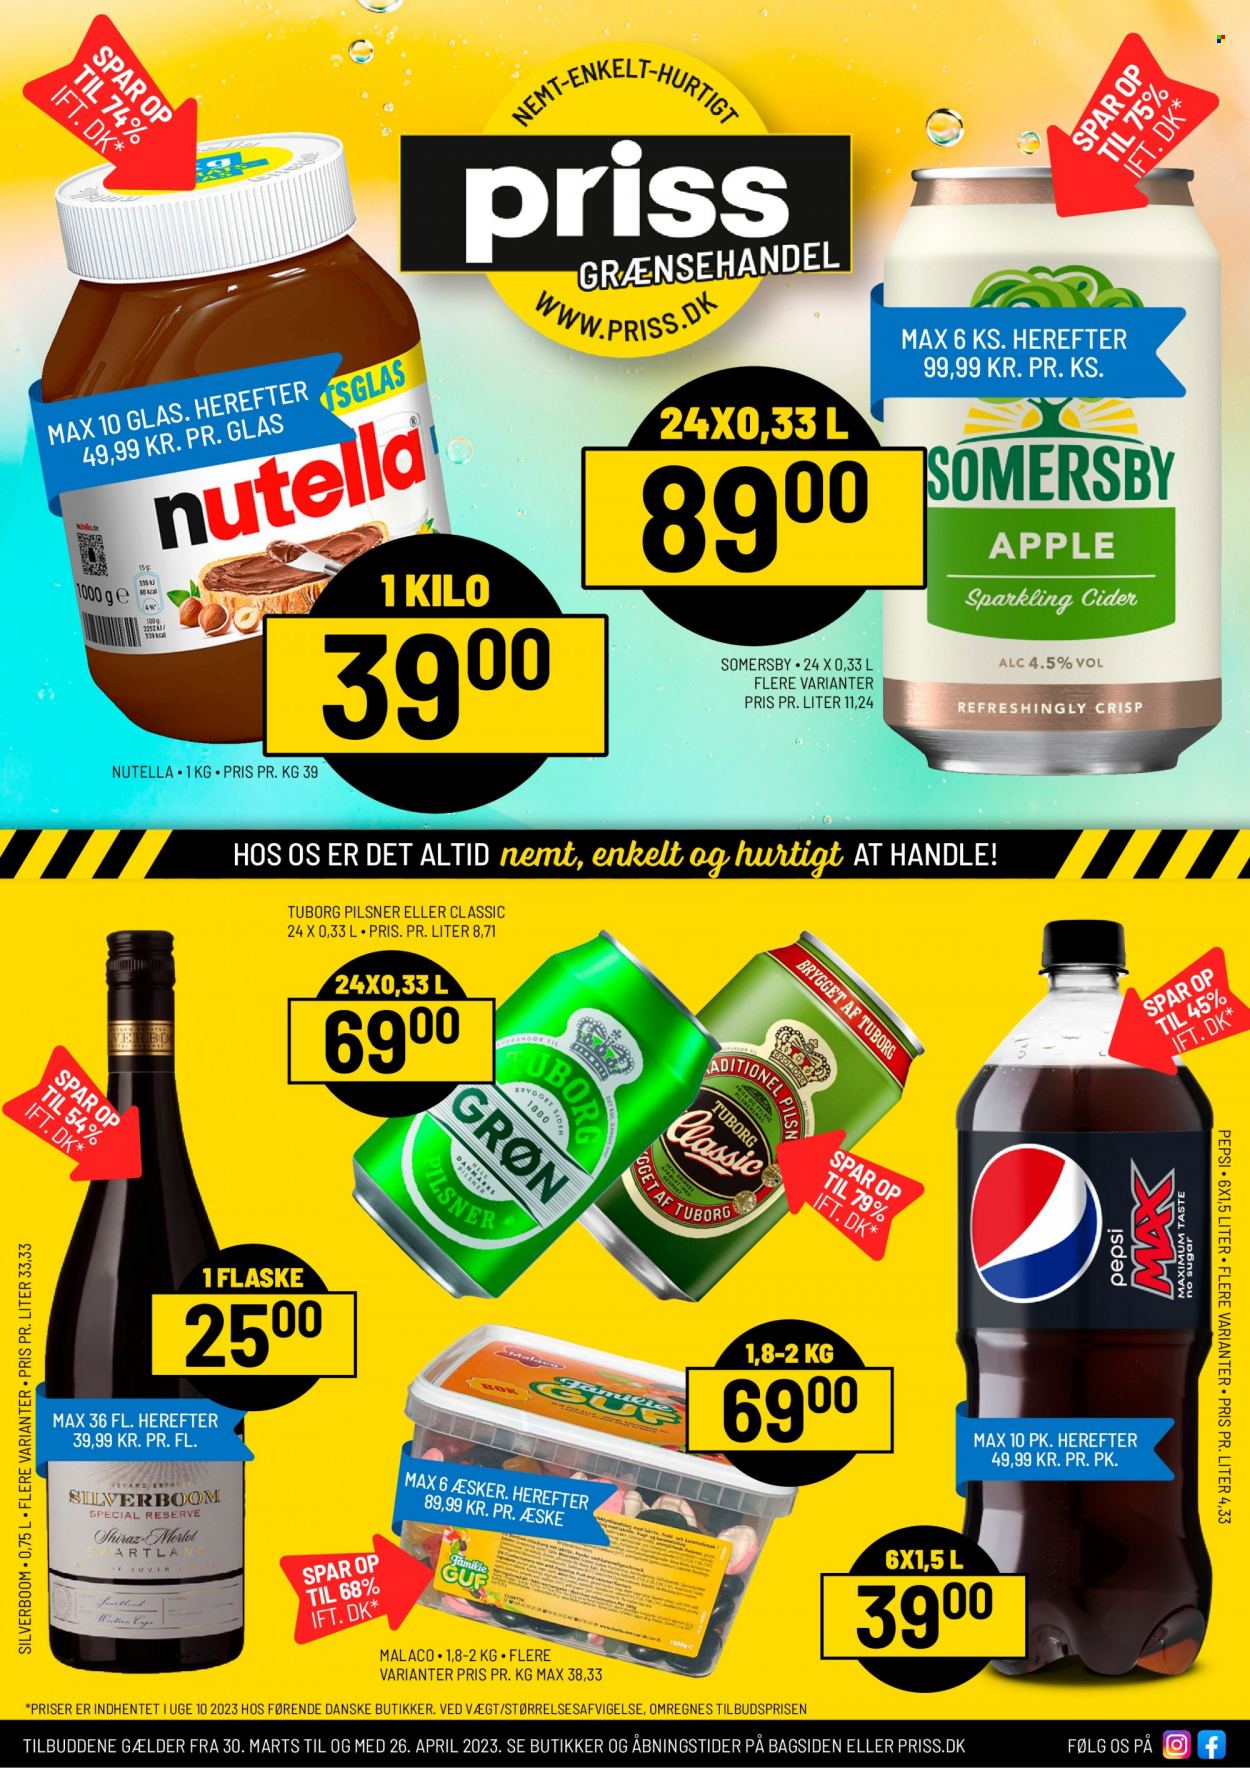 thumbnail - Priss tilbud  - 30.3.2023 - 26.4.2023 - tilbudsprodukter - Malaco, Nutella, vin, Pepsi, Pepsi Max, sodavand. Side 1.